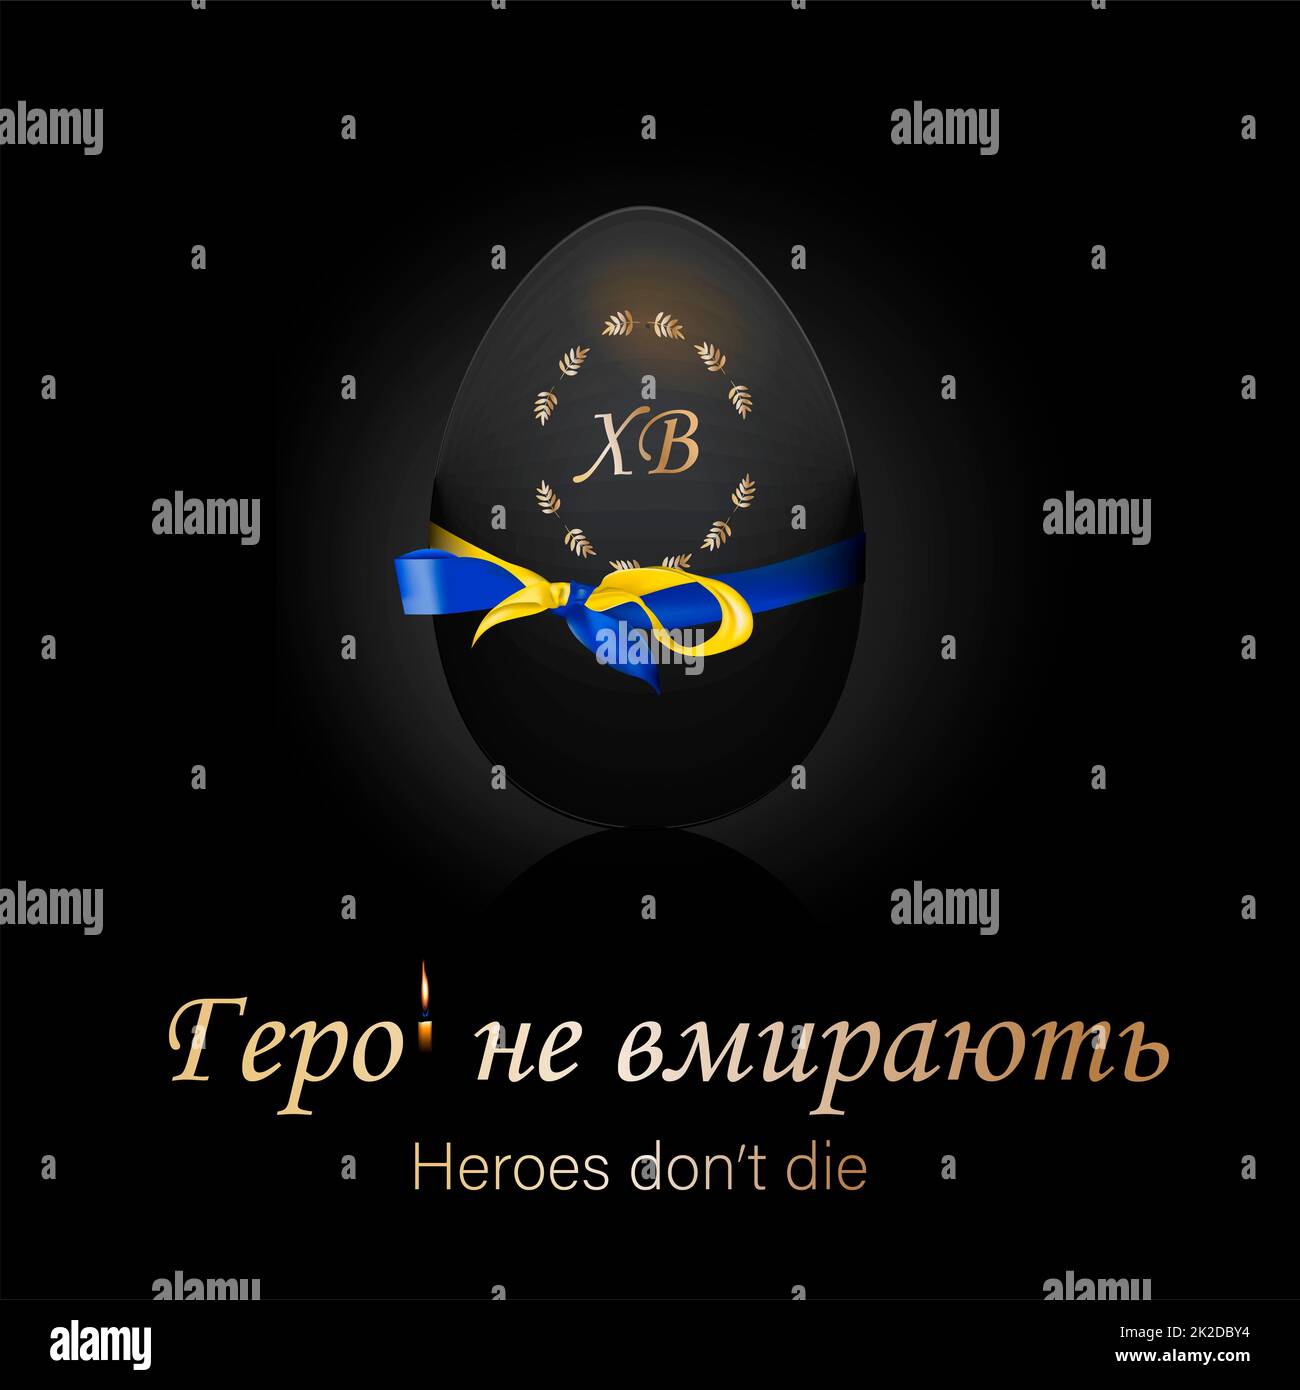 Easter. Easter eggs. Easter 2022 in Ukraine. Translation from Ukrainian: heroes don't die. Christ is risen. Vector illustration on a black background. Memorial Day. Stock Photo